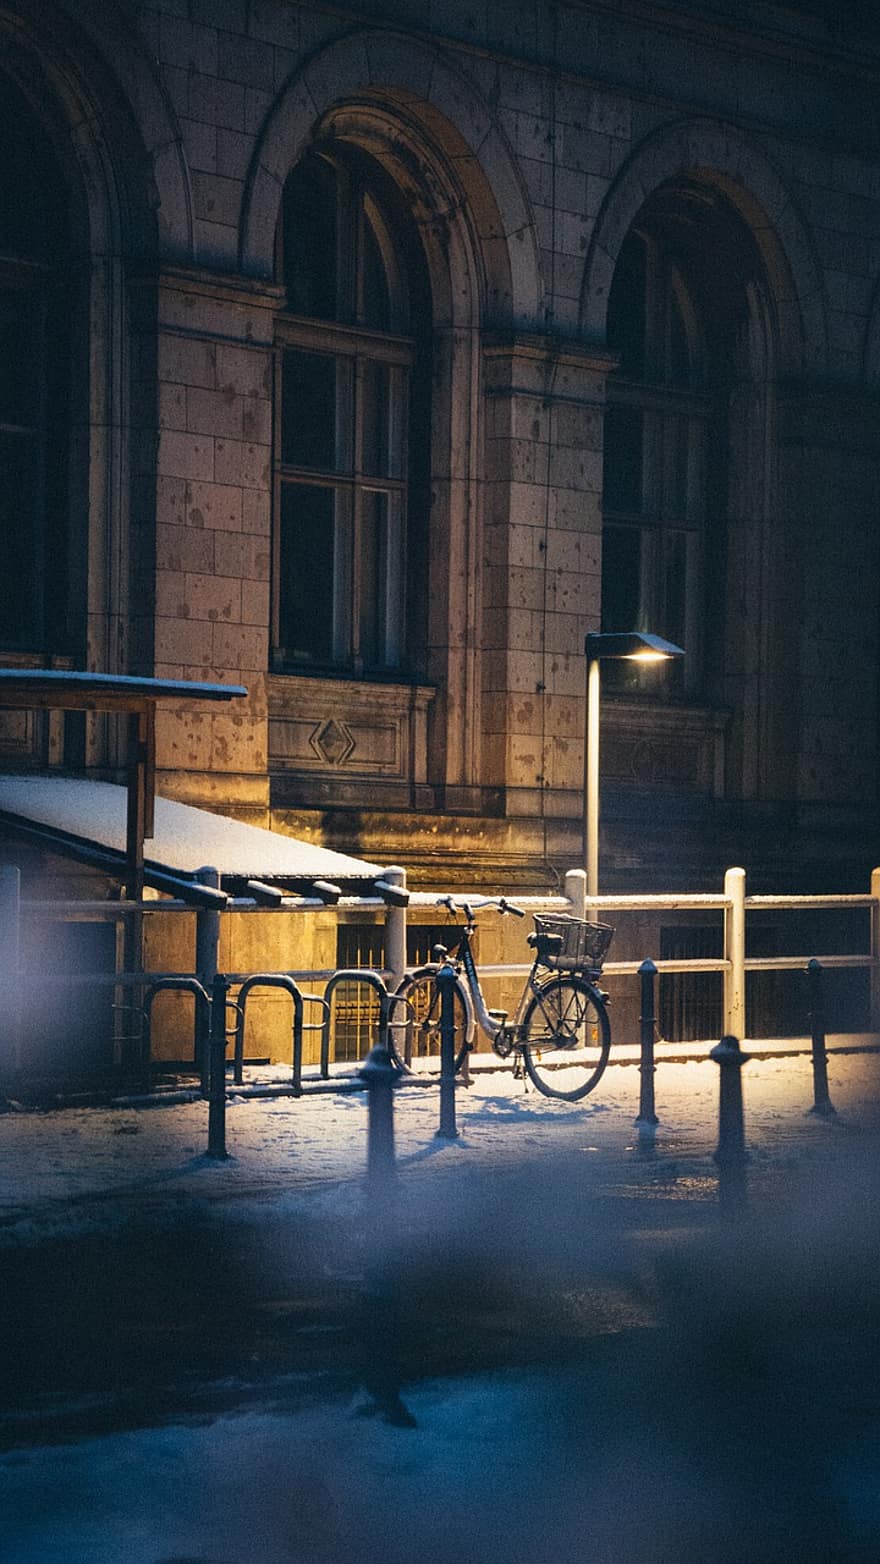 Bike, City, Urban, Architecture, Bicycle, Evening, night, city life, dark, dusk, built structure